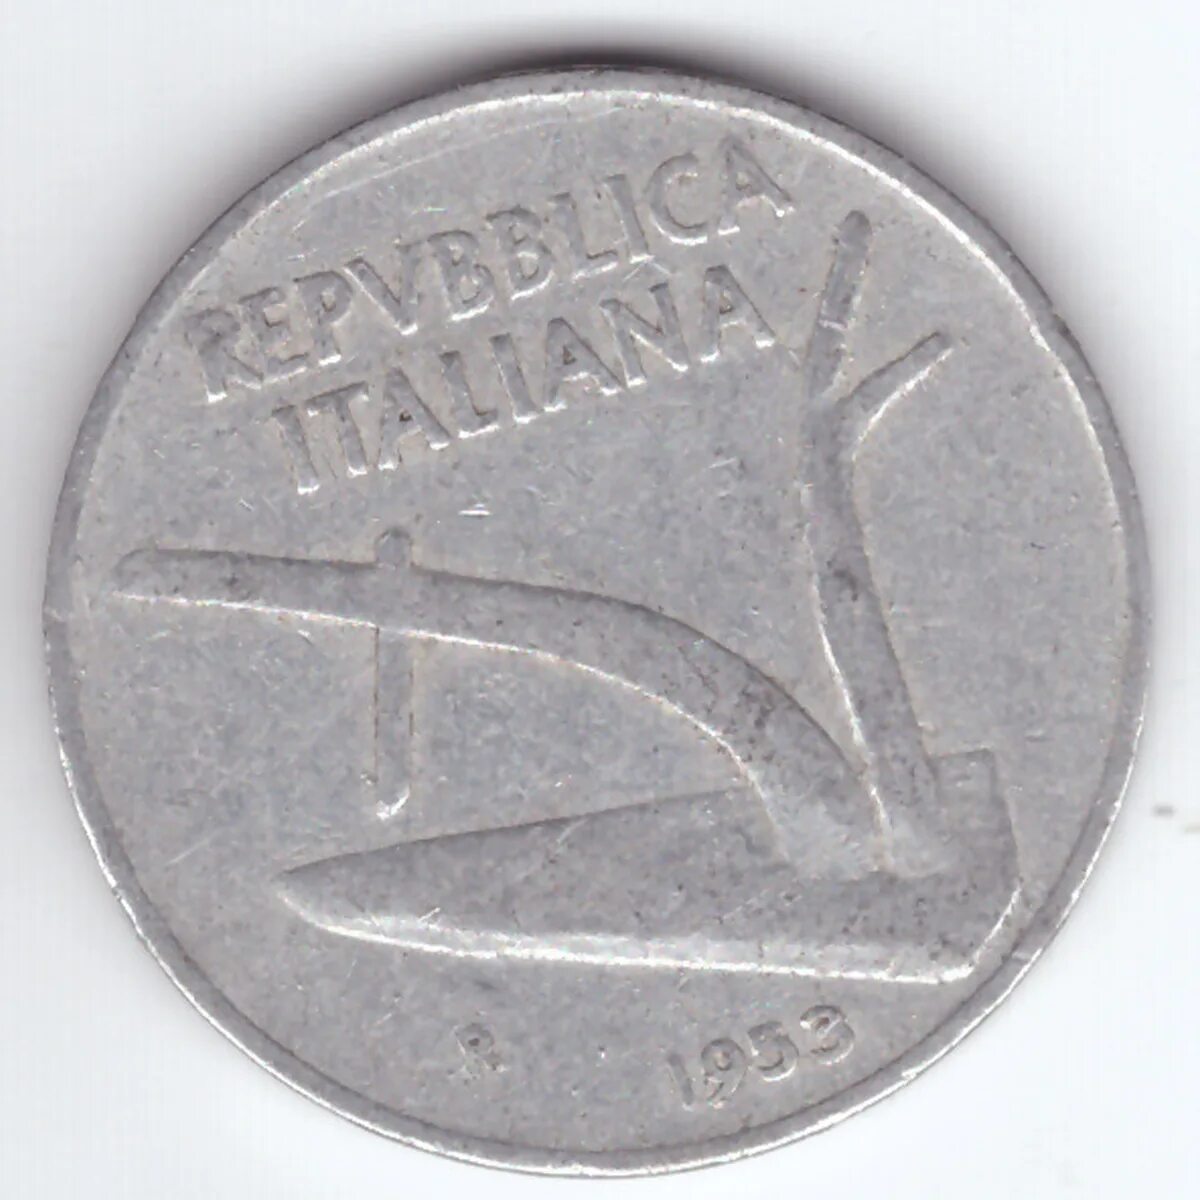 30 лир сколько. 10 Лир Италия. Монета 10 лир Республика Италия 1956 г. 10 Лир 2011 Хорватия. Монета кm#60 1926 года 10 лир Италия.